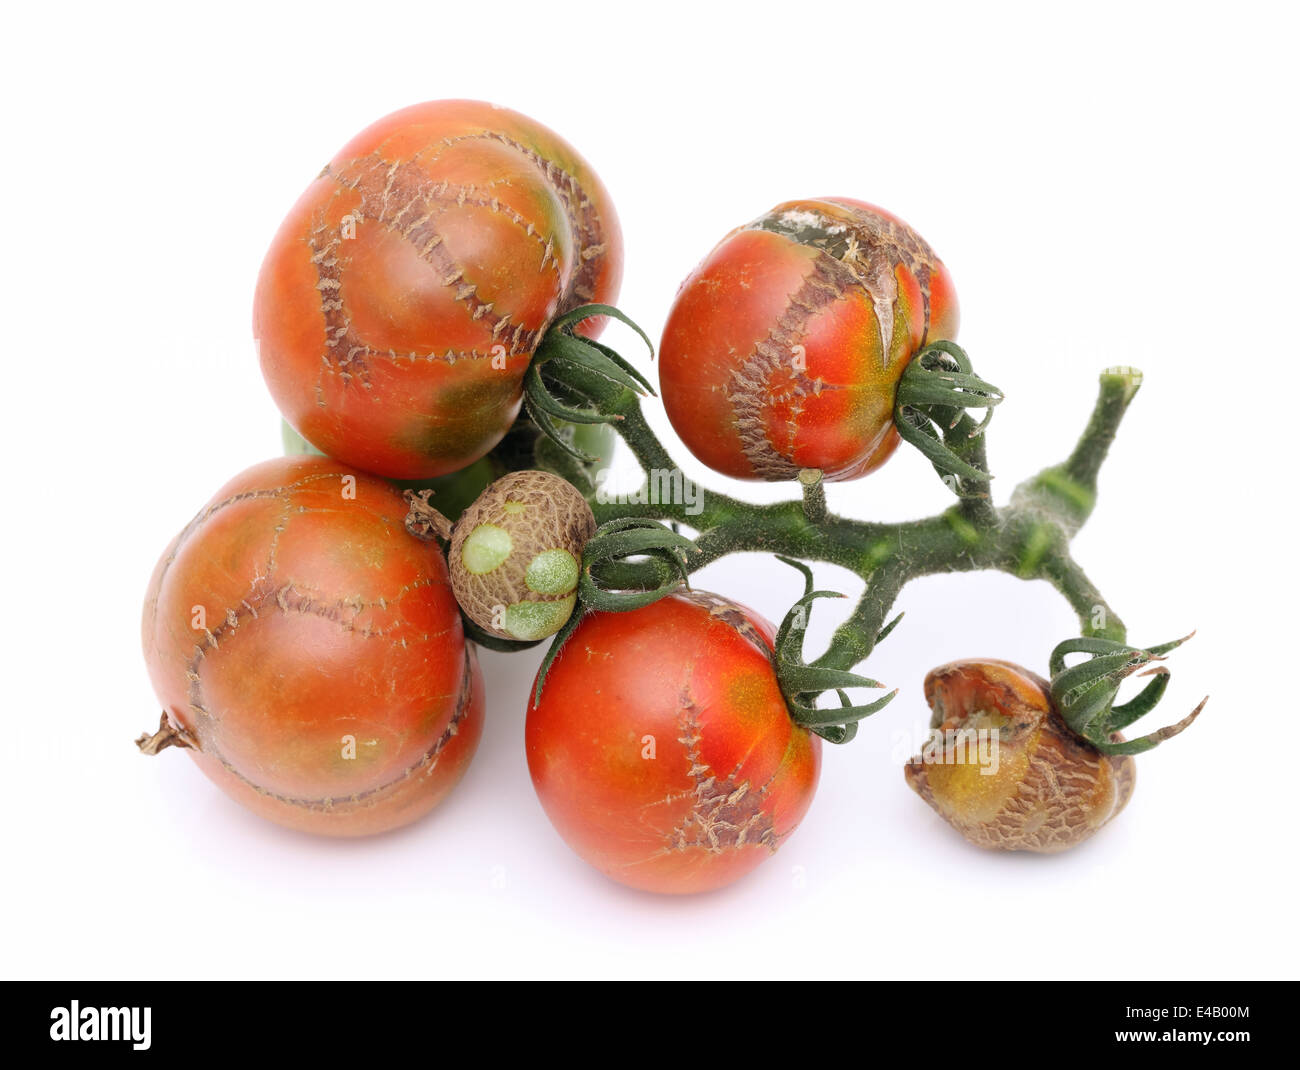 https://c8.alamy.com/comp/E4B00M/rotten-tomatoes-damaged-by-the-illnesses-E4B00M.jpg